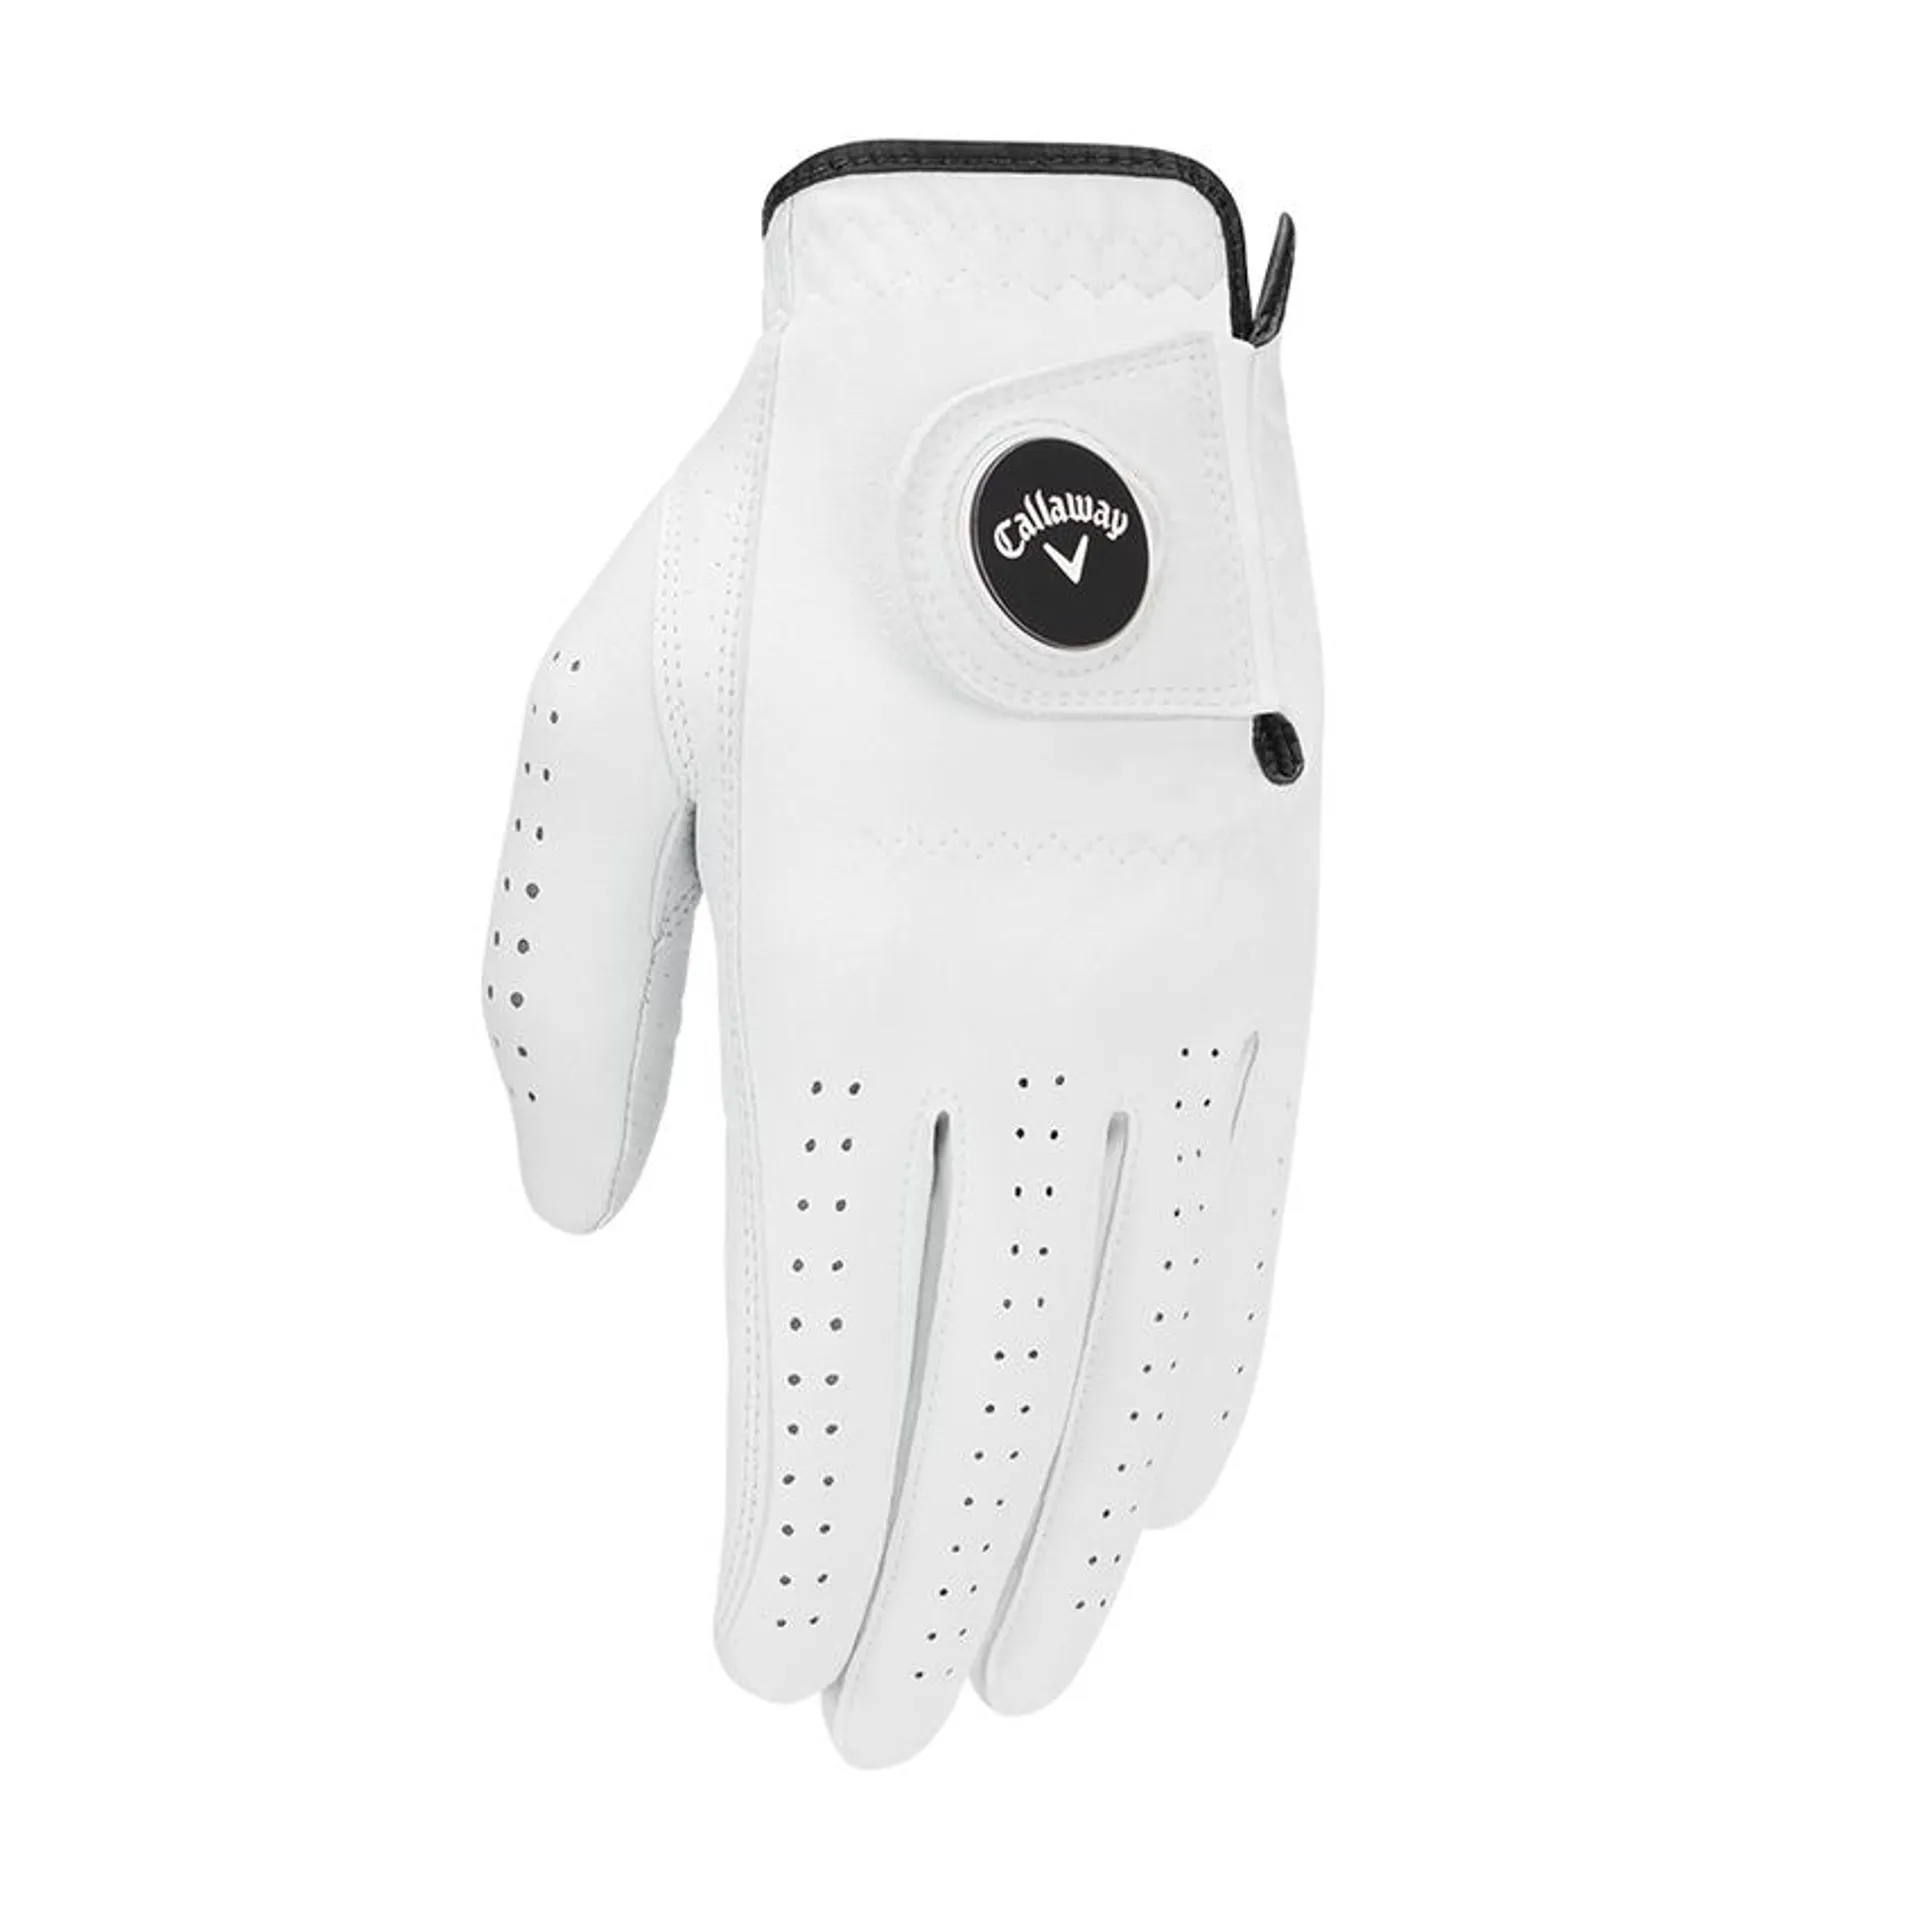 Women's Optiflex Gloves